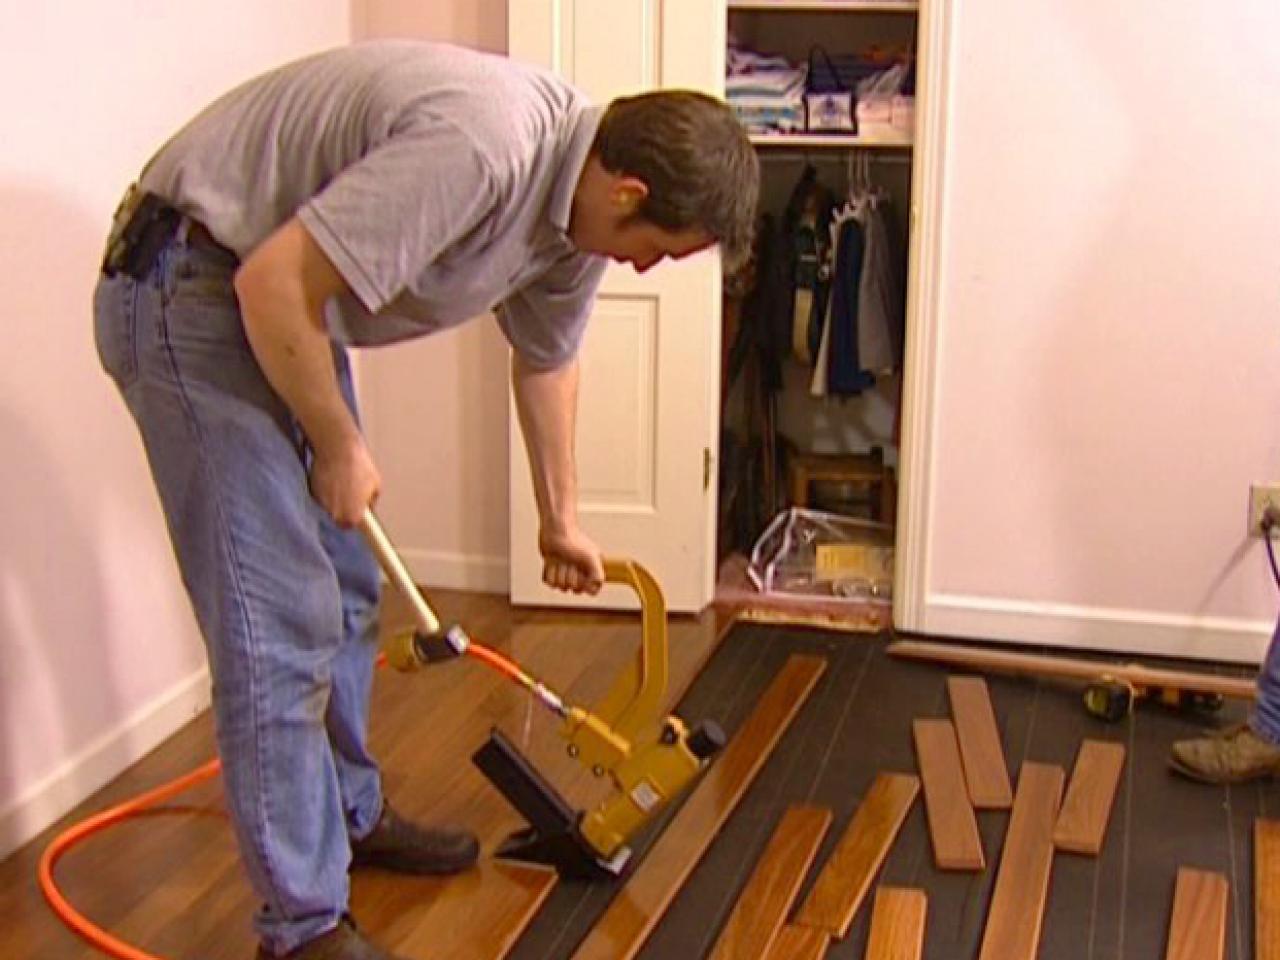 How To Install A Hardwood Floor, How To Do Hardwood Flooring Yourself